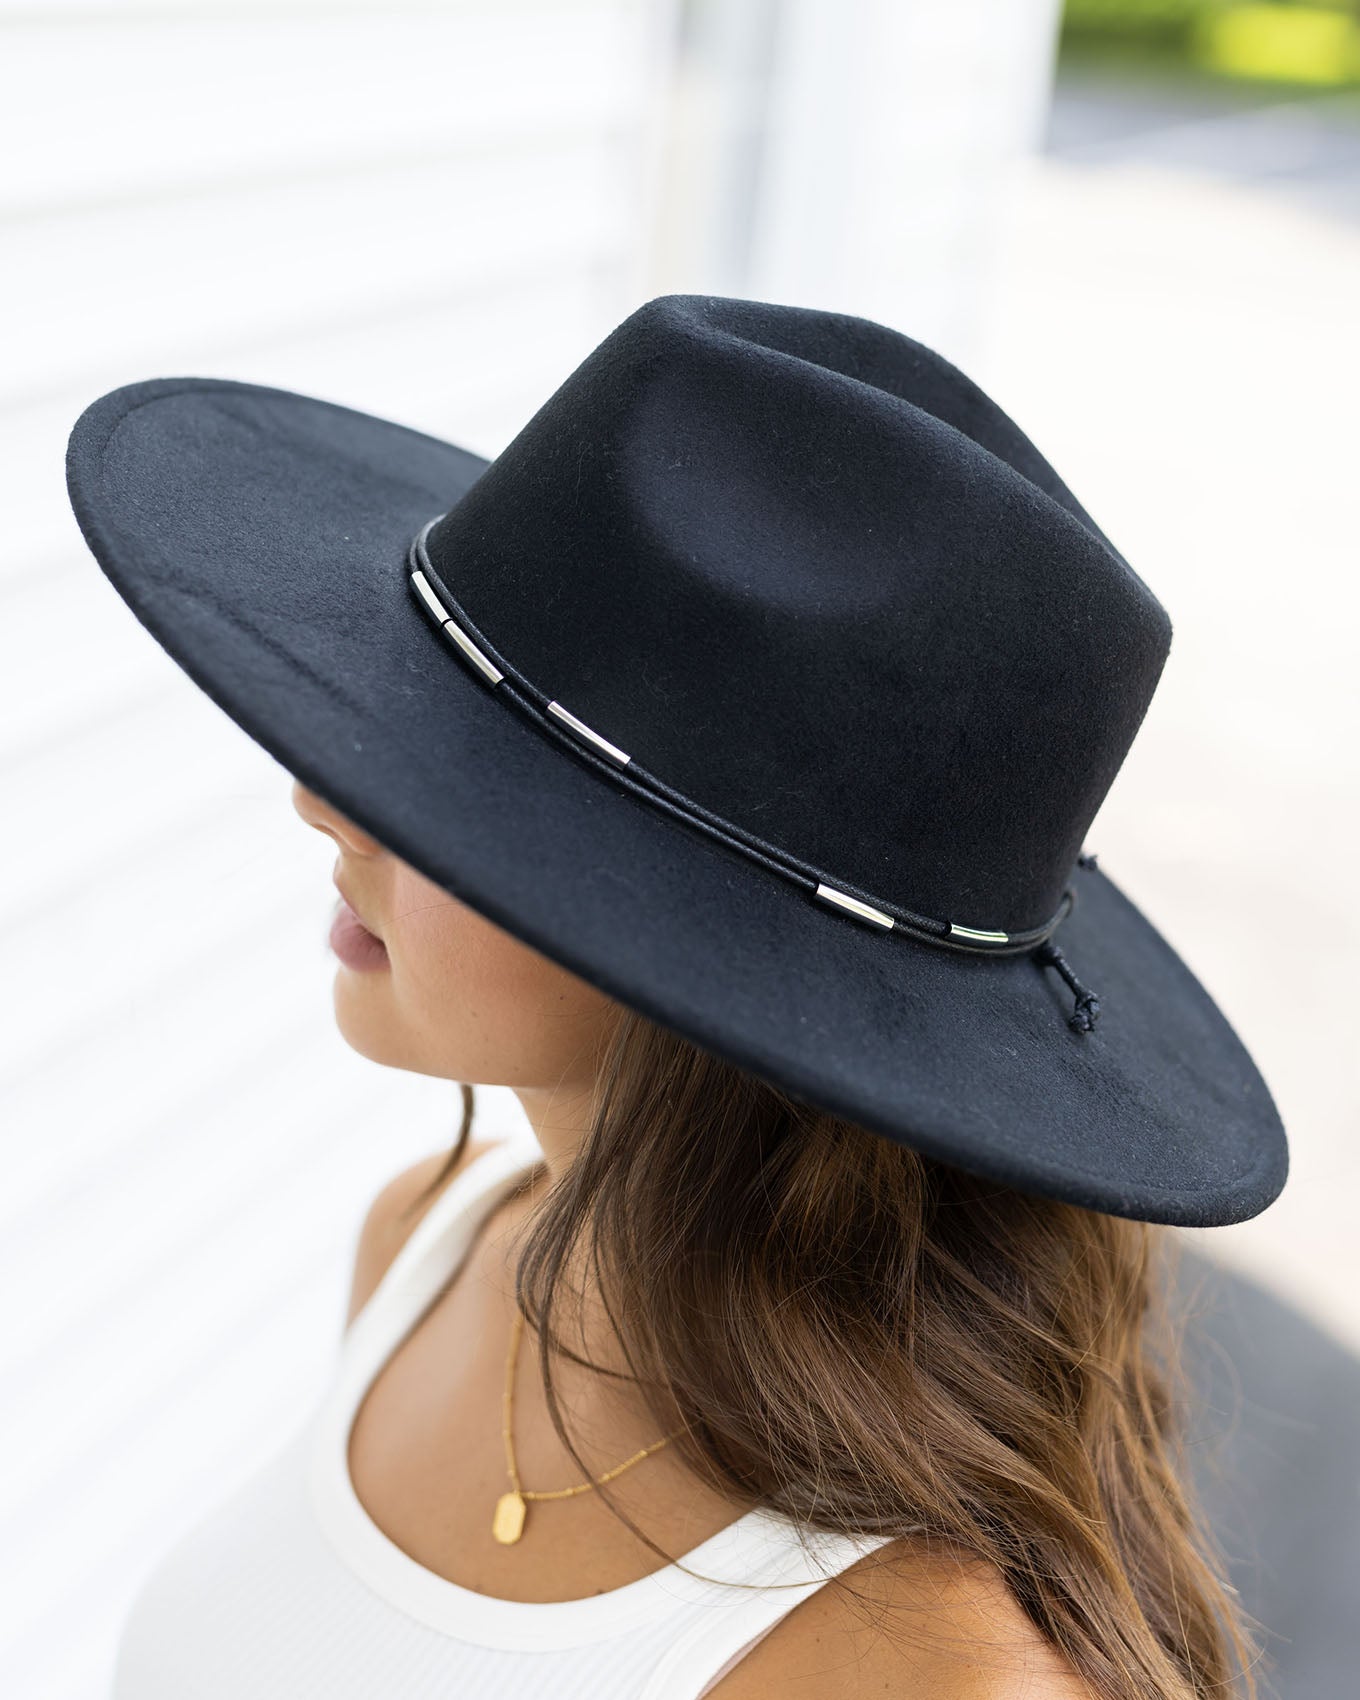 Black Wide Brim Round Crown Felt Plain Hats-W0139A-BLACK- Sun